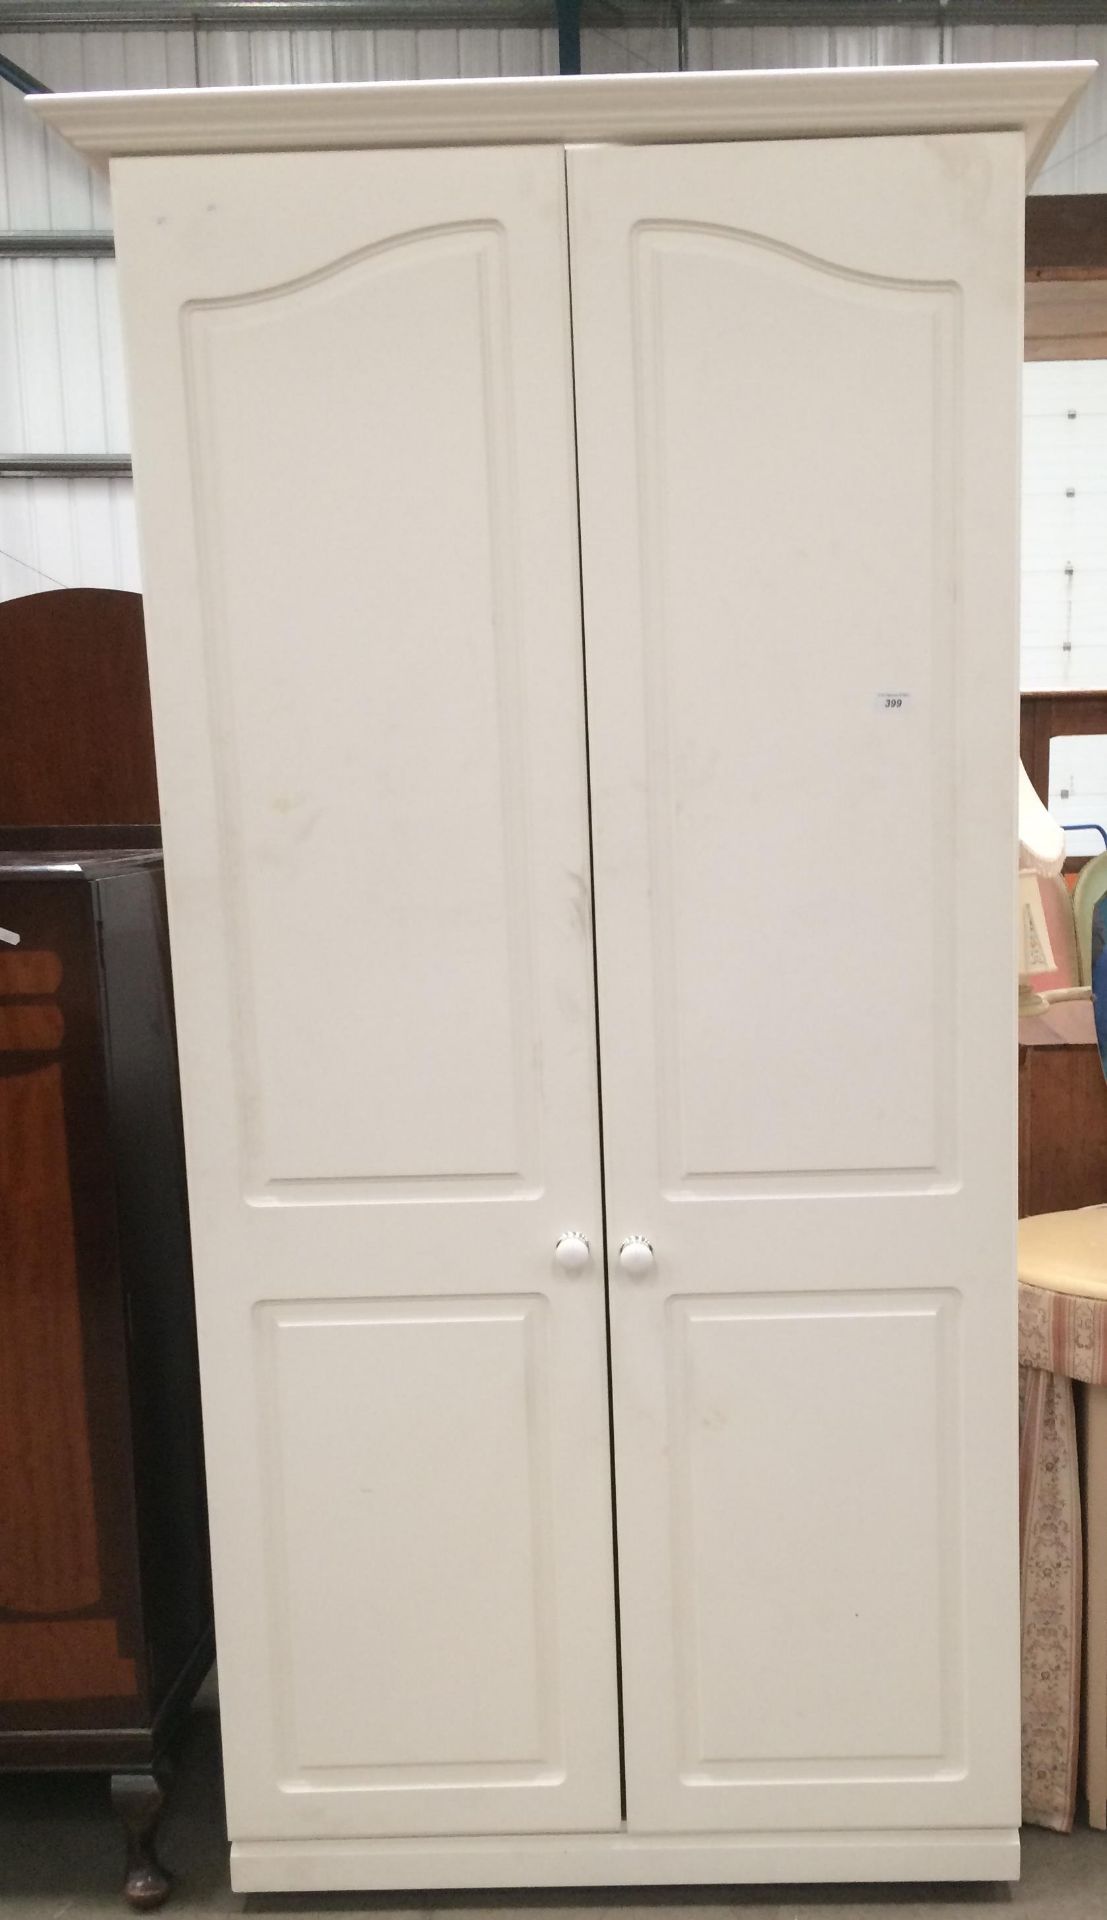 A white laminate two door wardrobe 90cm x 200cm high by Igoe Furniture